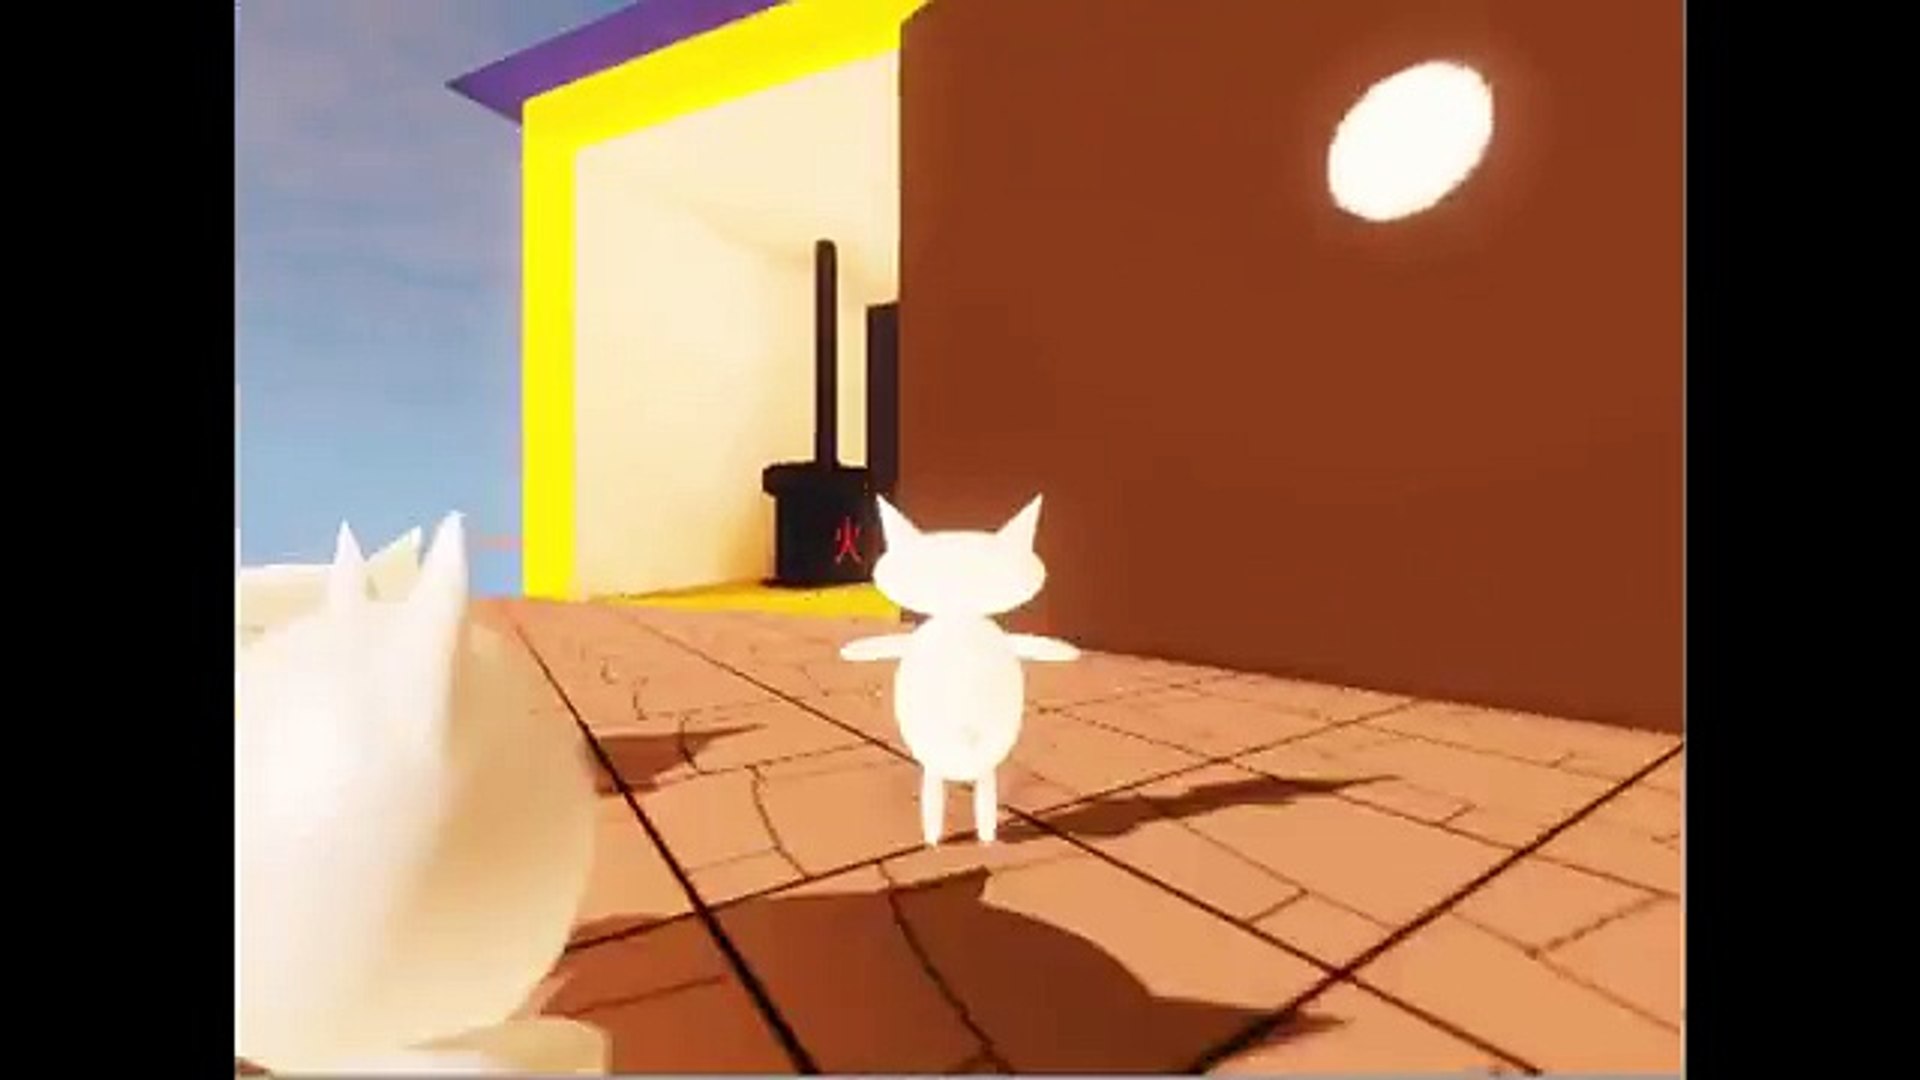 Cat Mario 3d Download